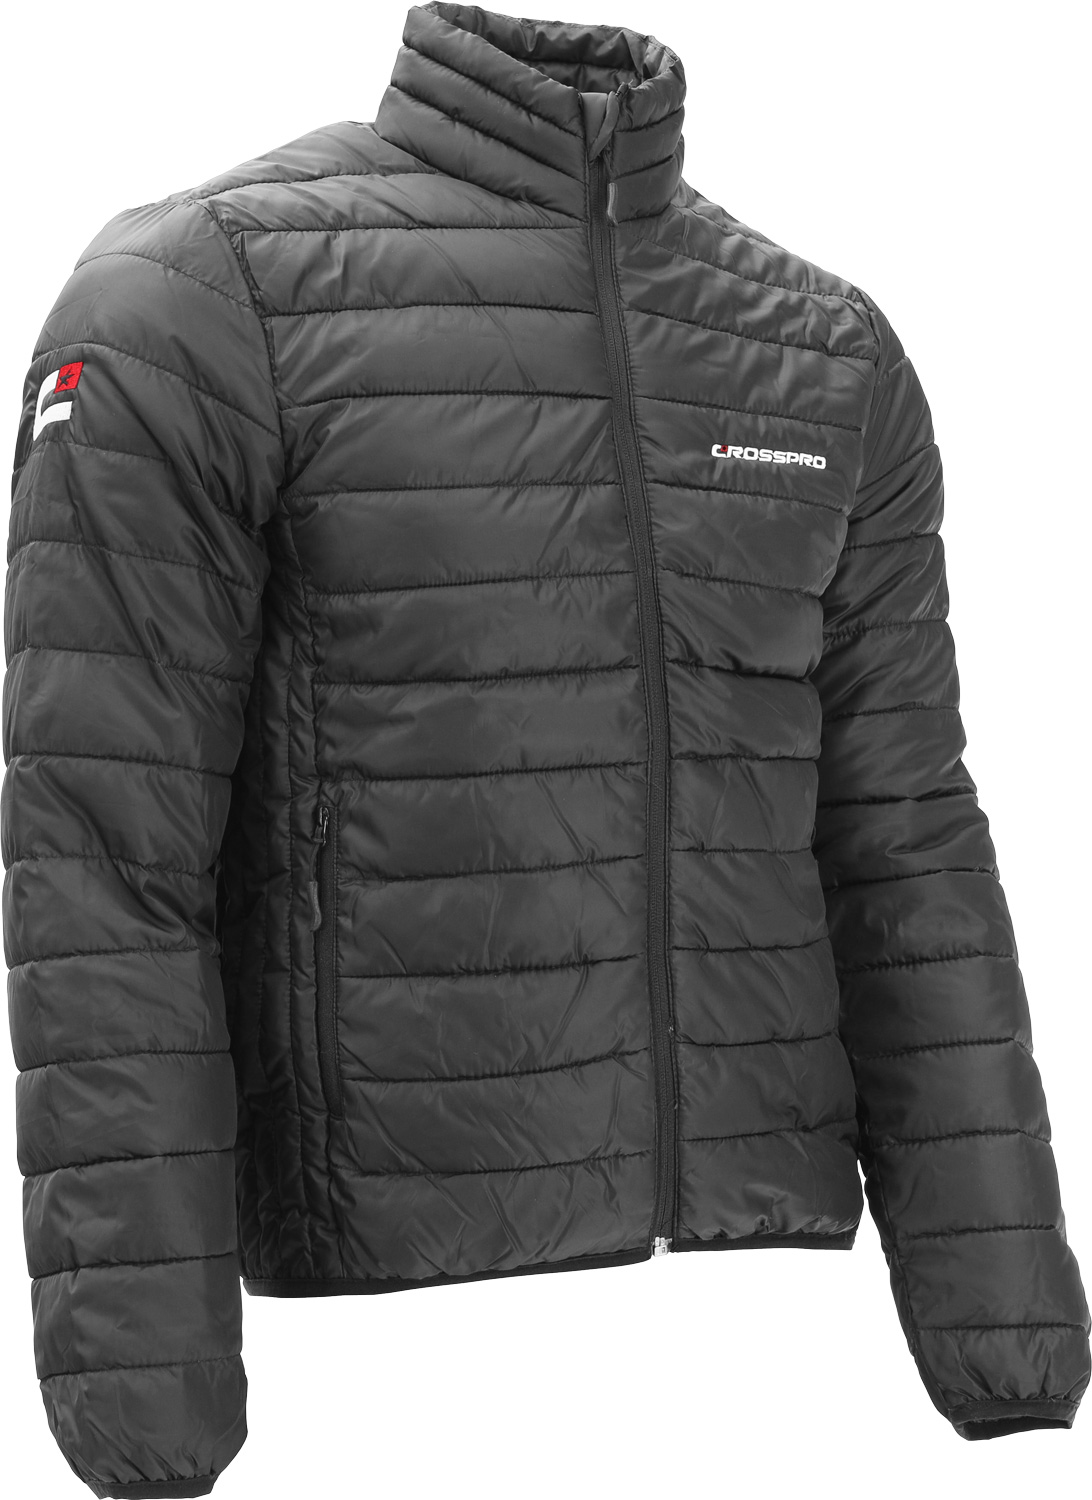 CrossPro Jacket Finland (S) Black